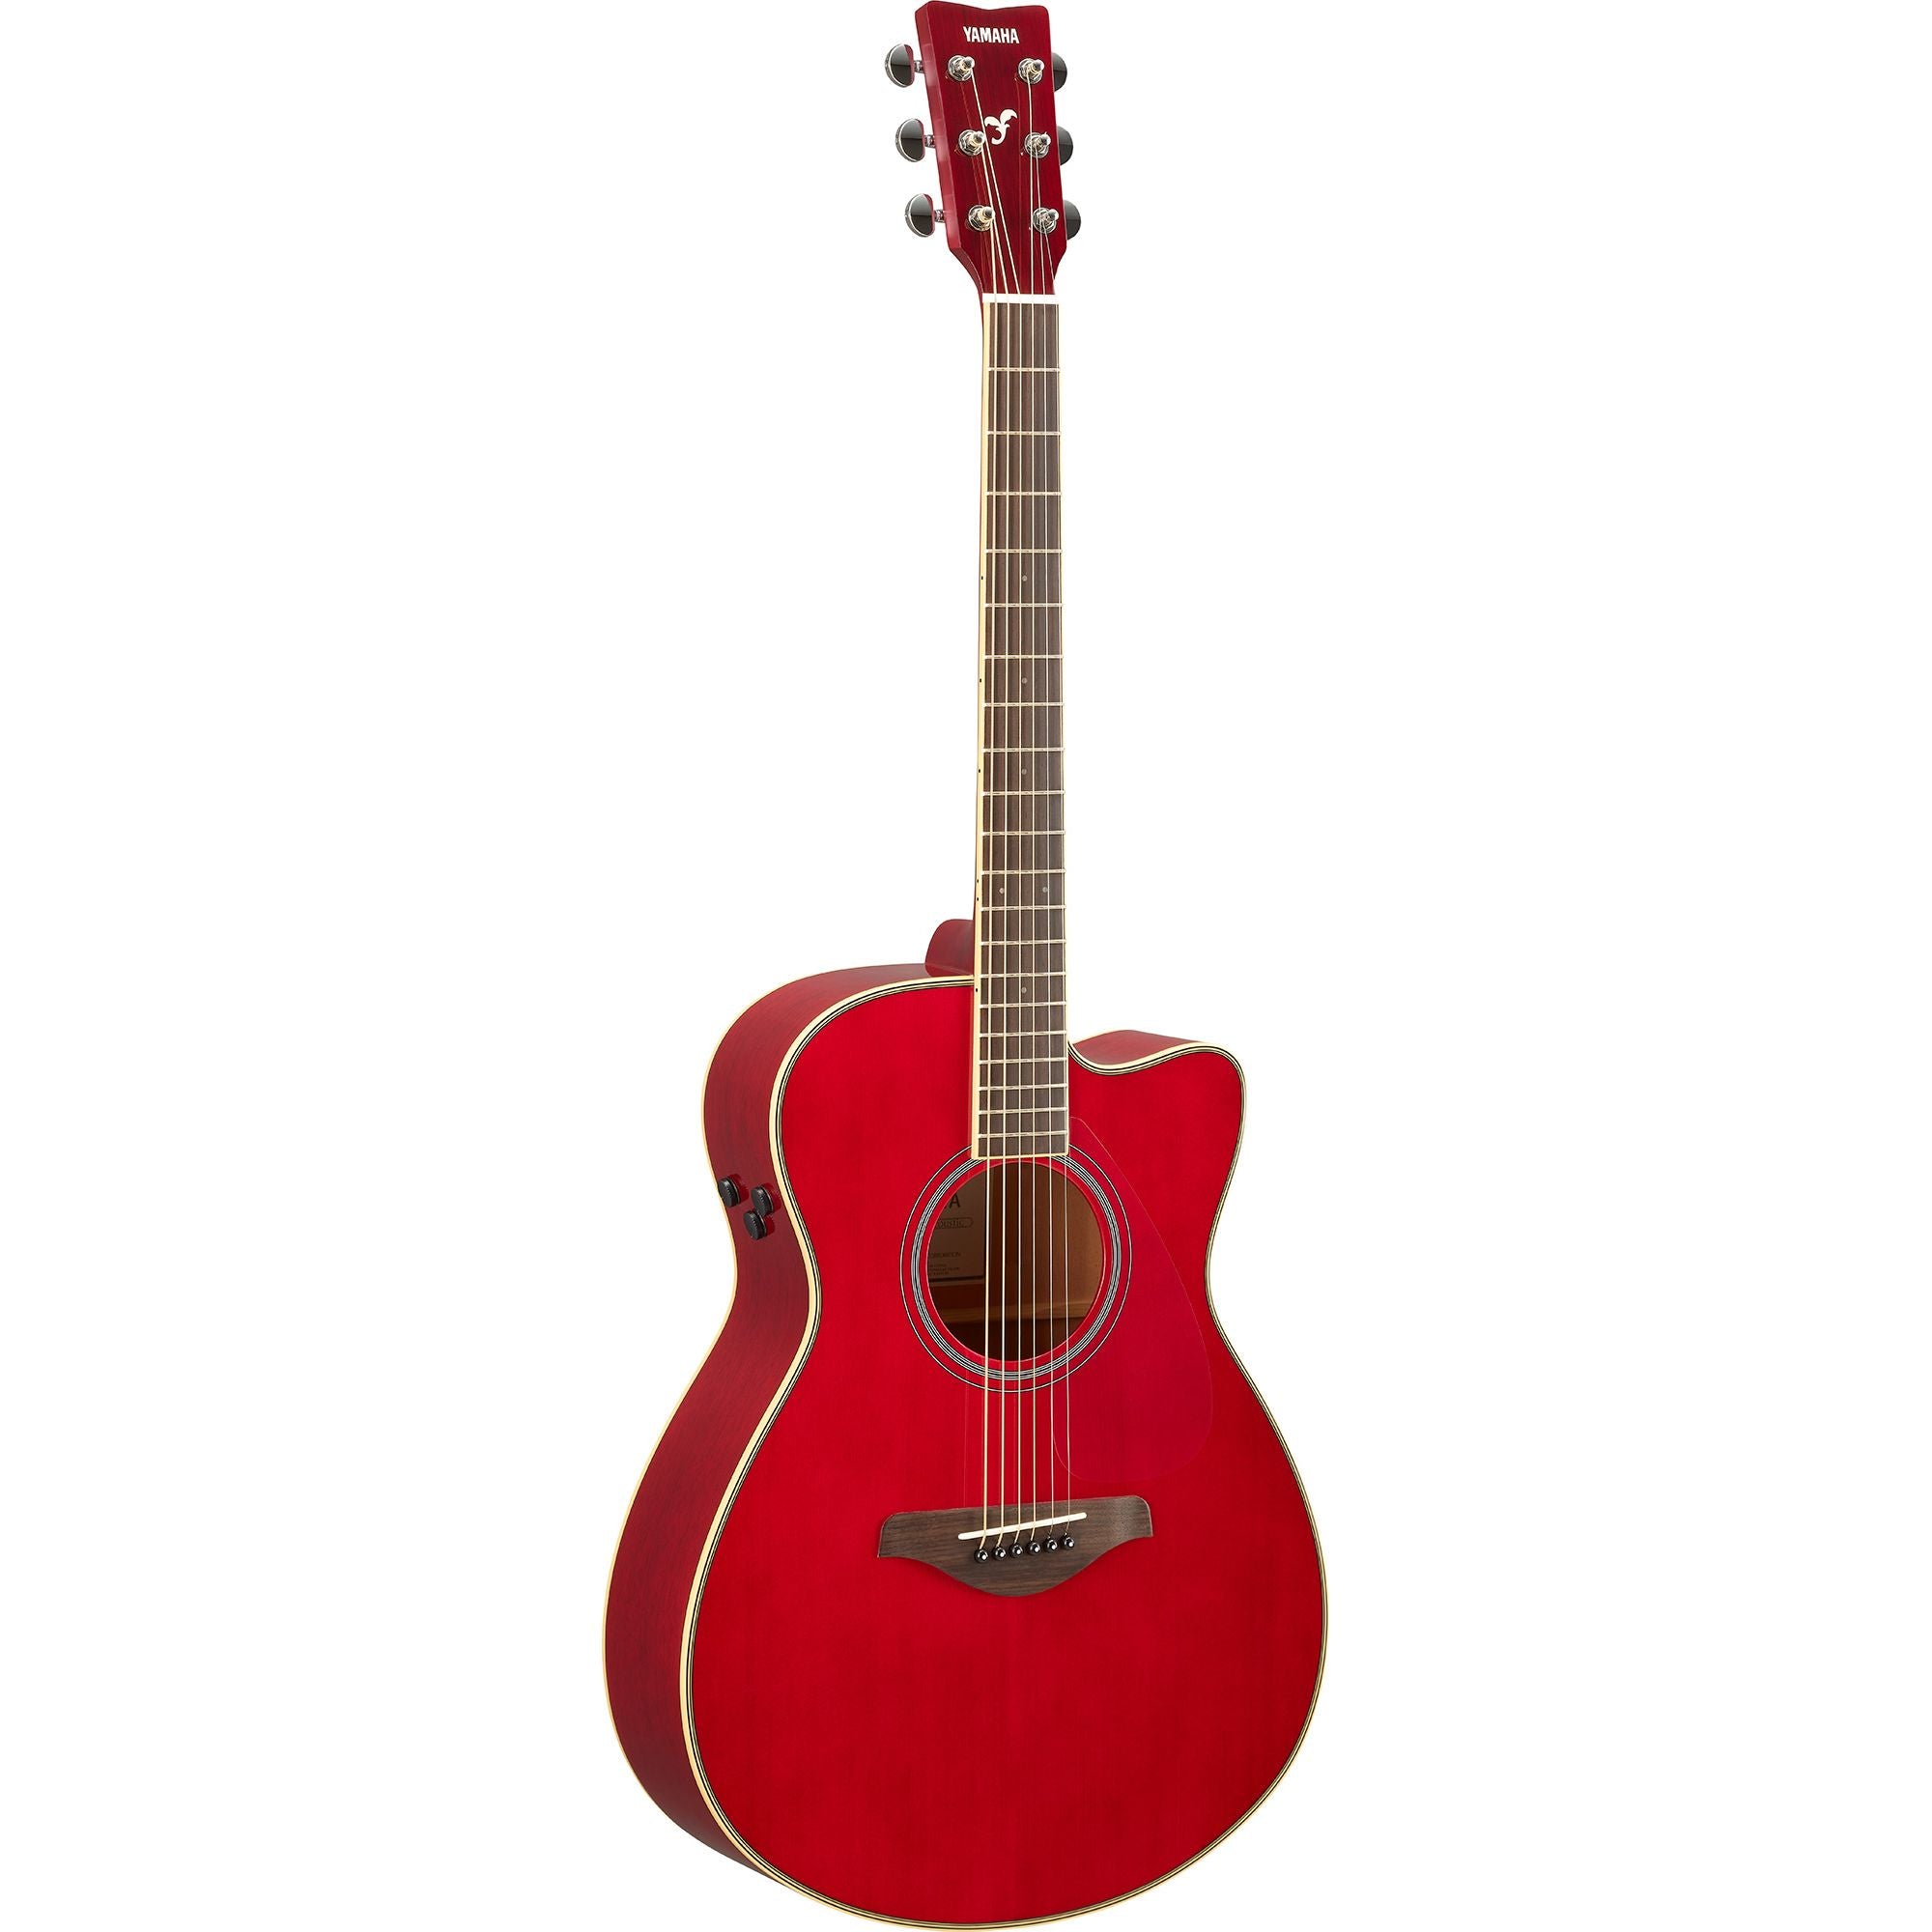 Yamaha FSC-TA Transacoustic Concert Cutaway Acoustic Electric Guitar